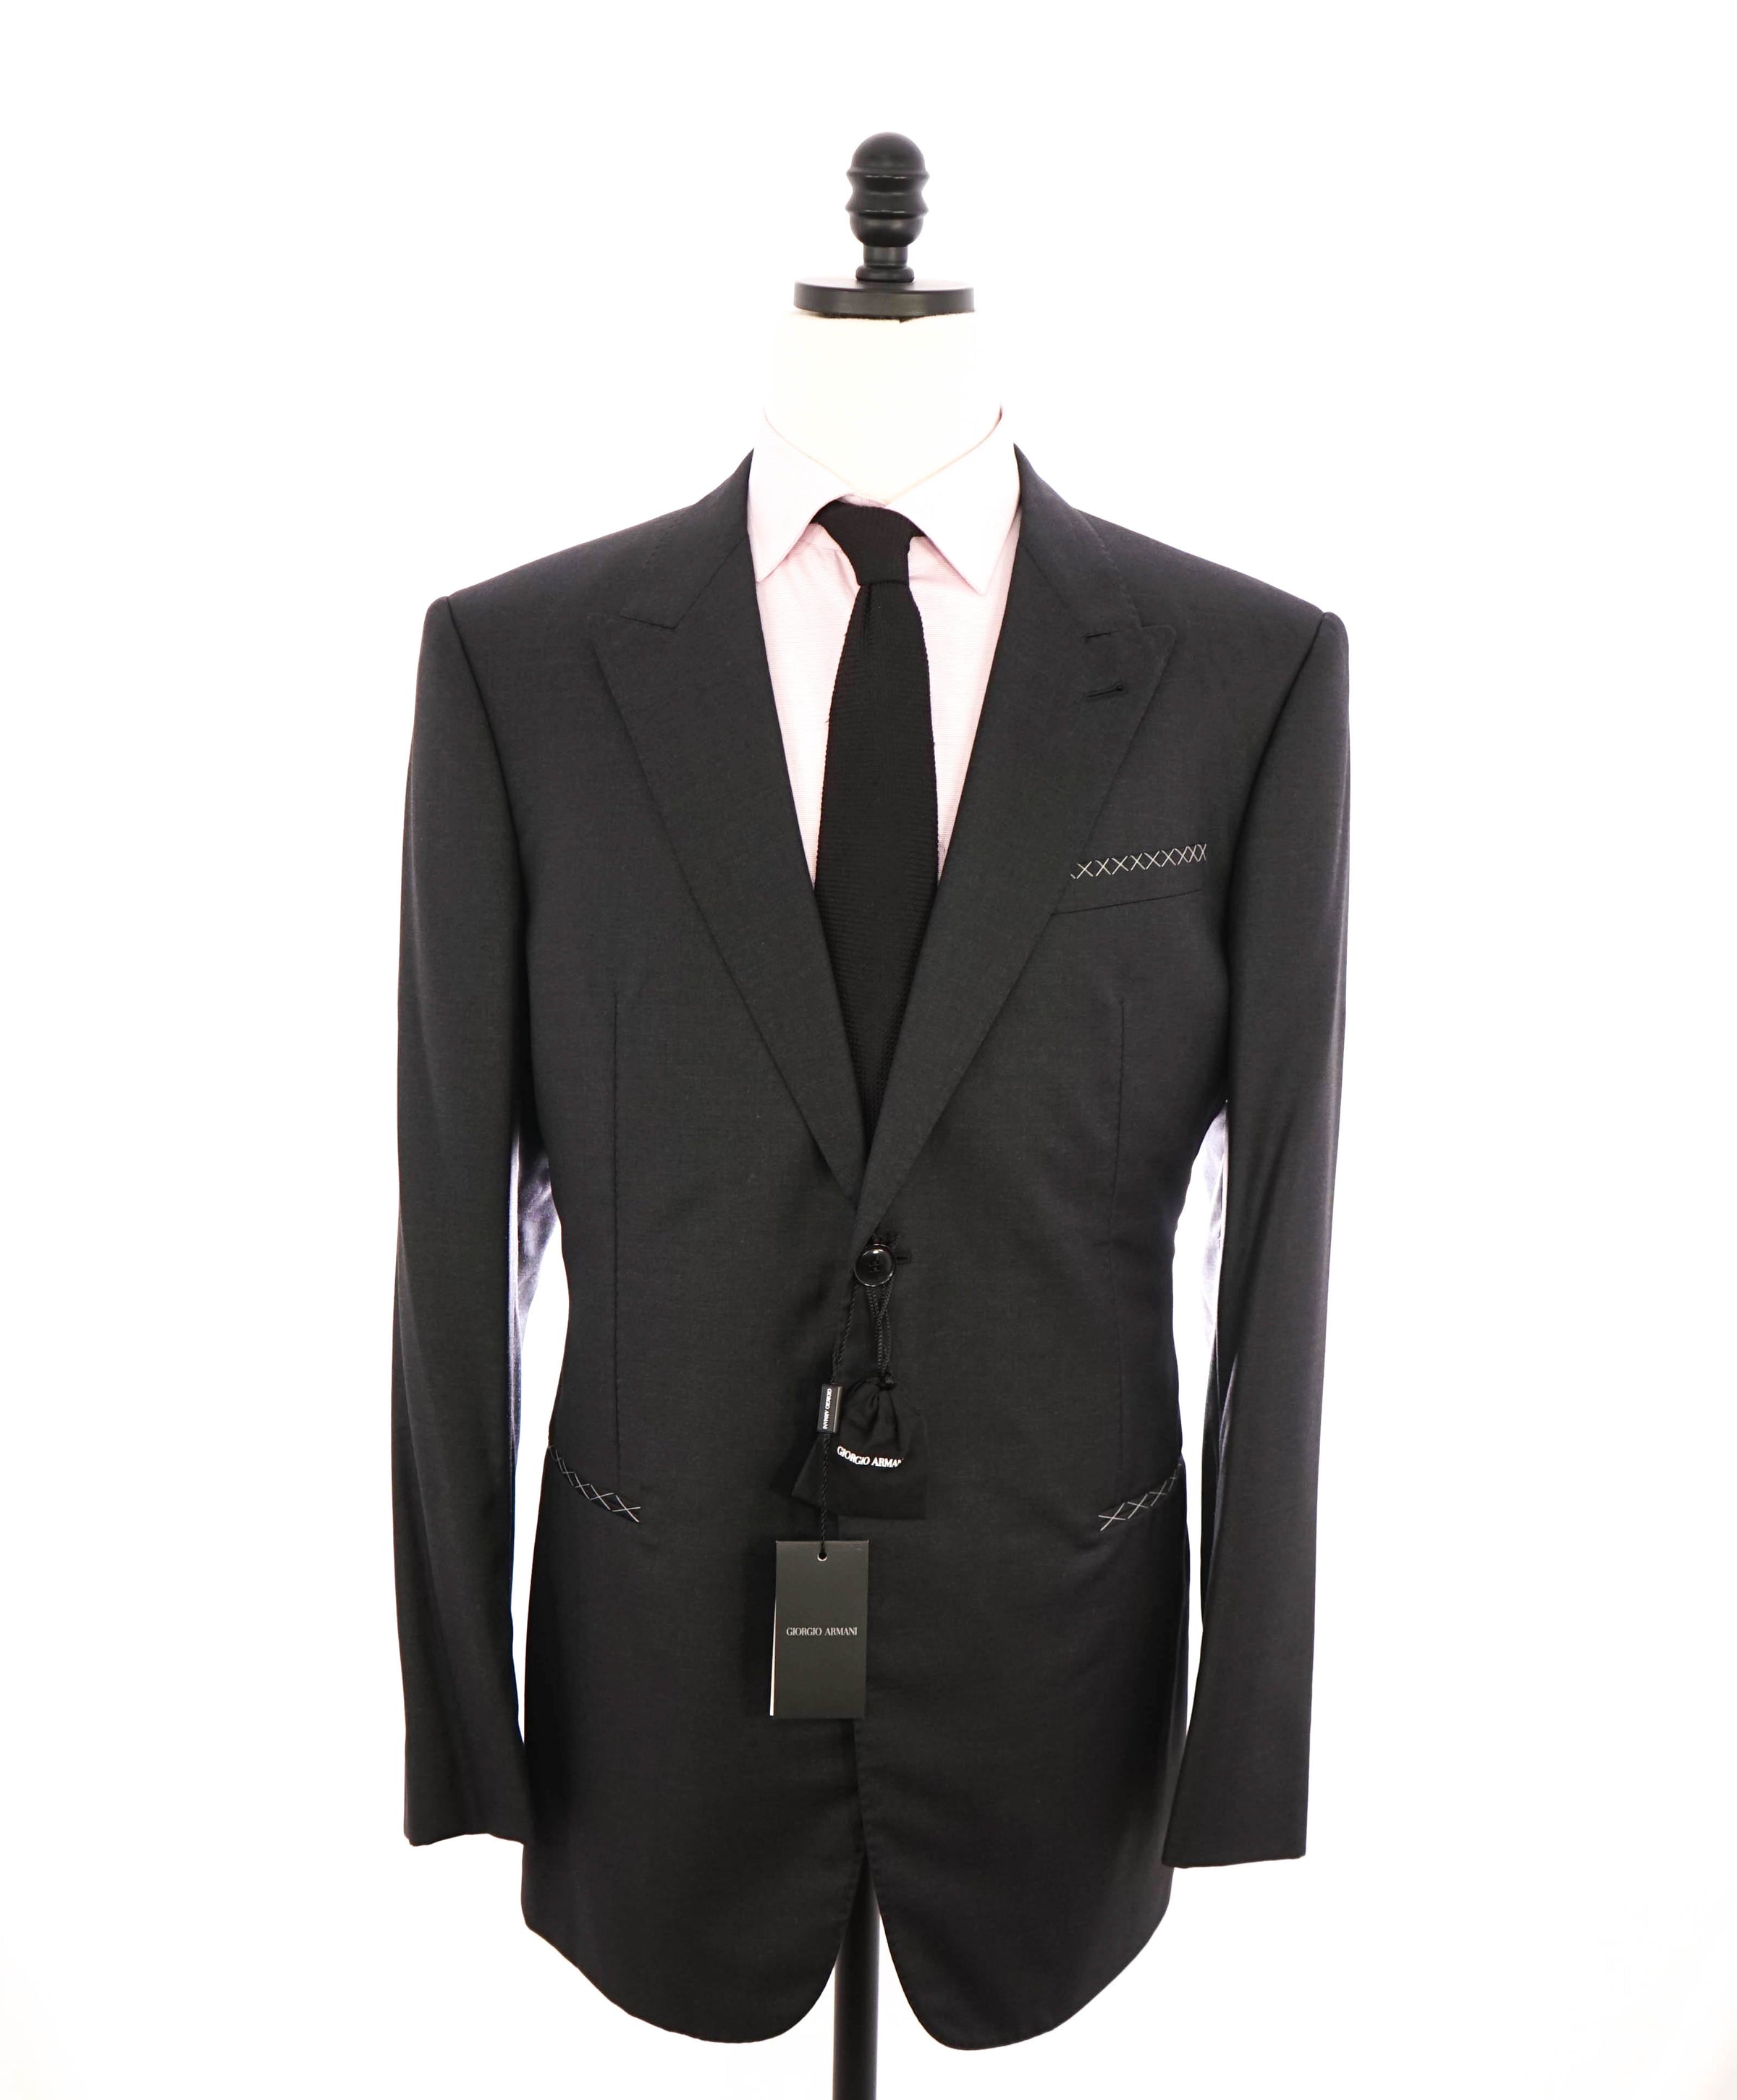 Giorgio Armani Suit - 52 | eBay